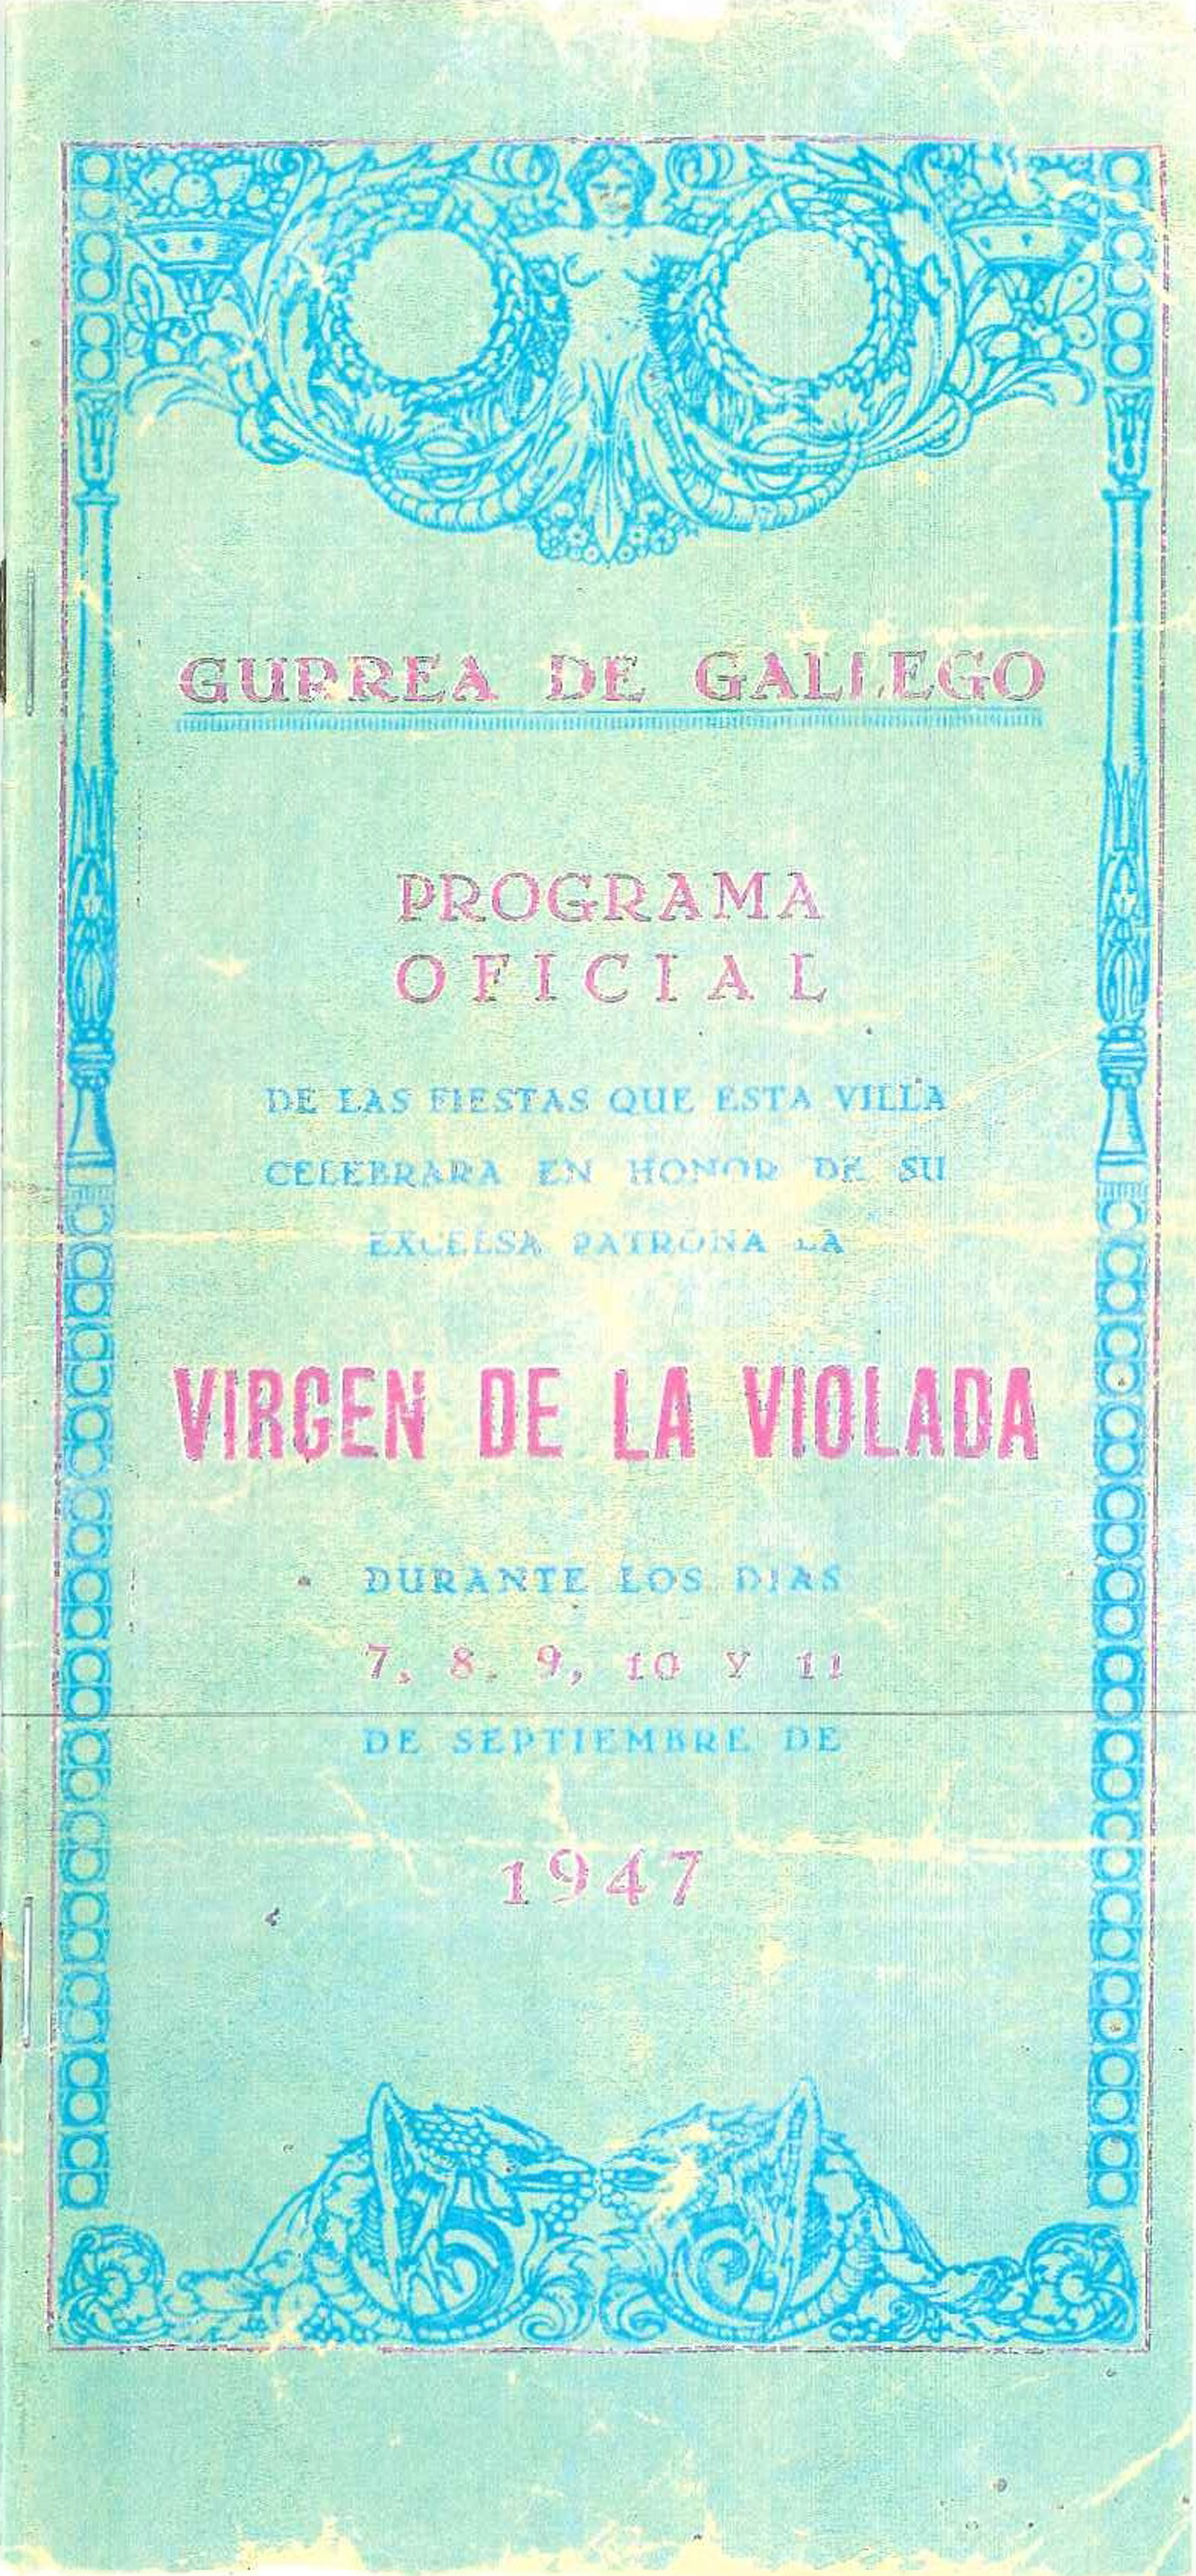 Programa de fiestas de Gurrea de Gállego.